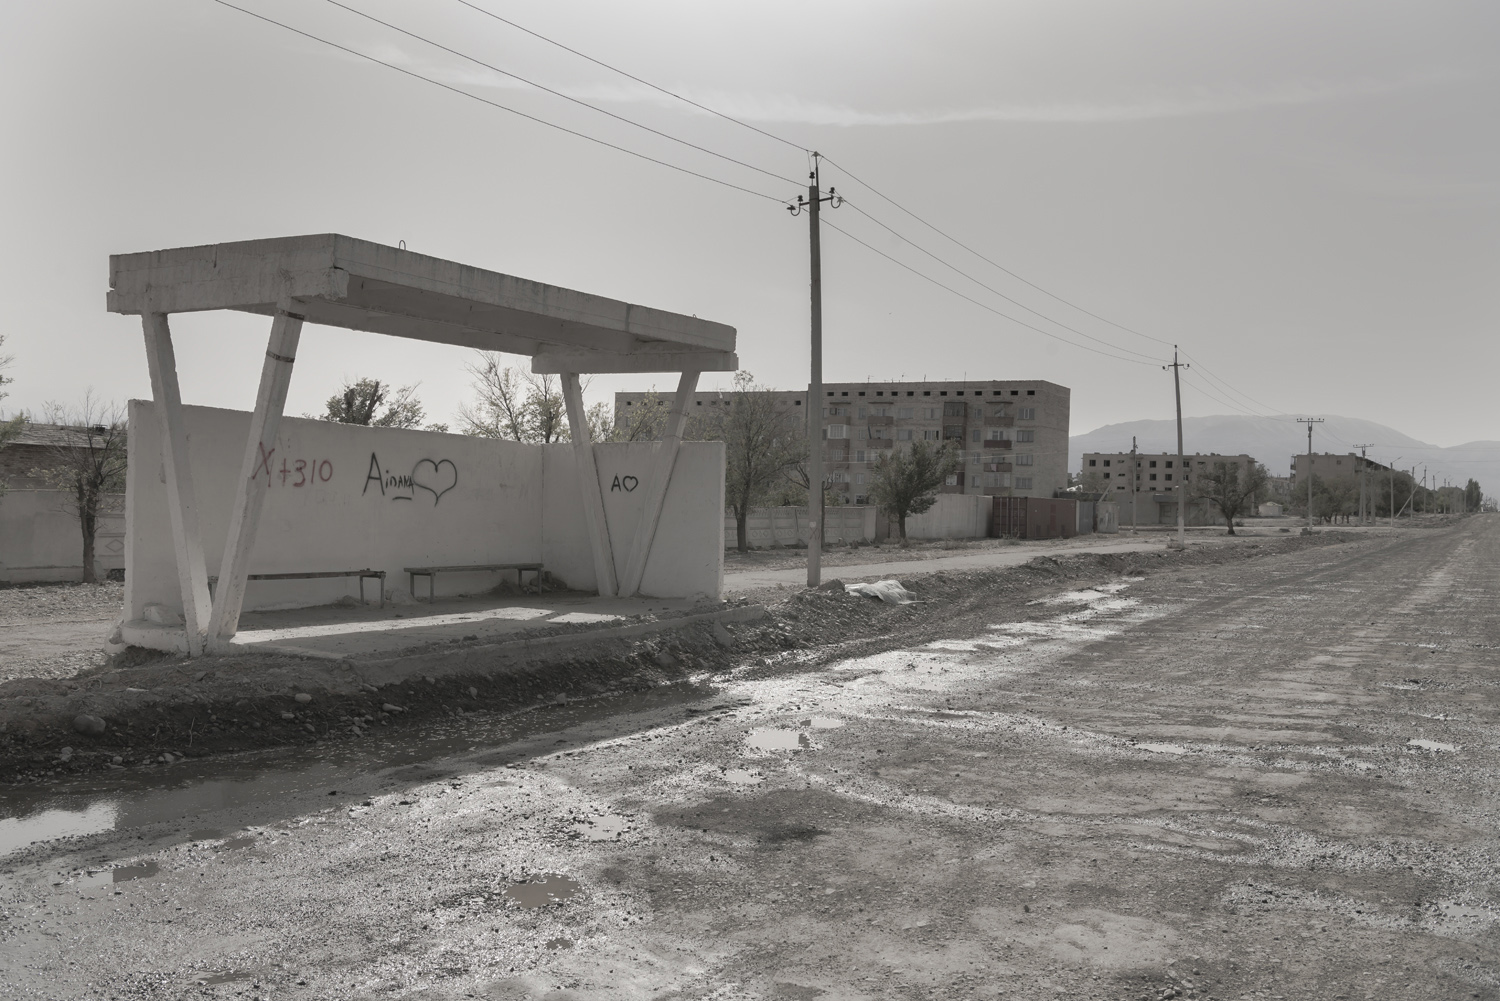 bus-stop-abandoned-boats-port-industrial-city-Soviet-Kyrgyzstan-abandoned-factories-jo-kearney-soviet-kyrgyzstan.jpg